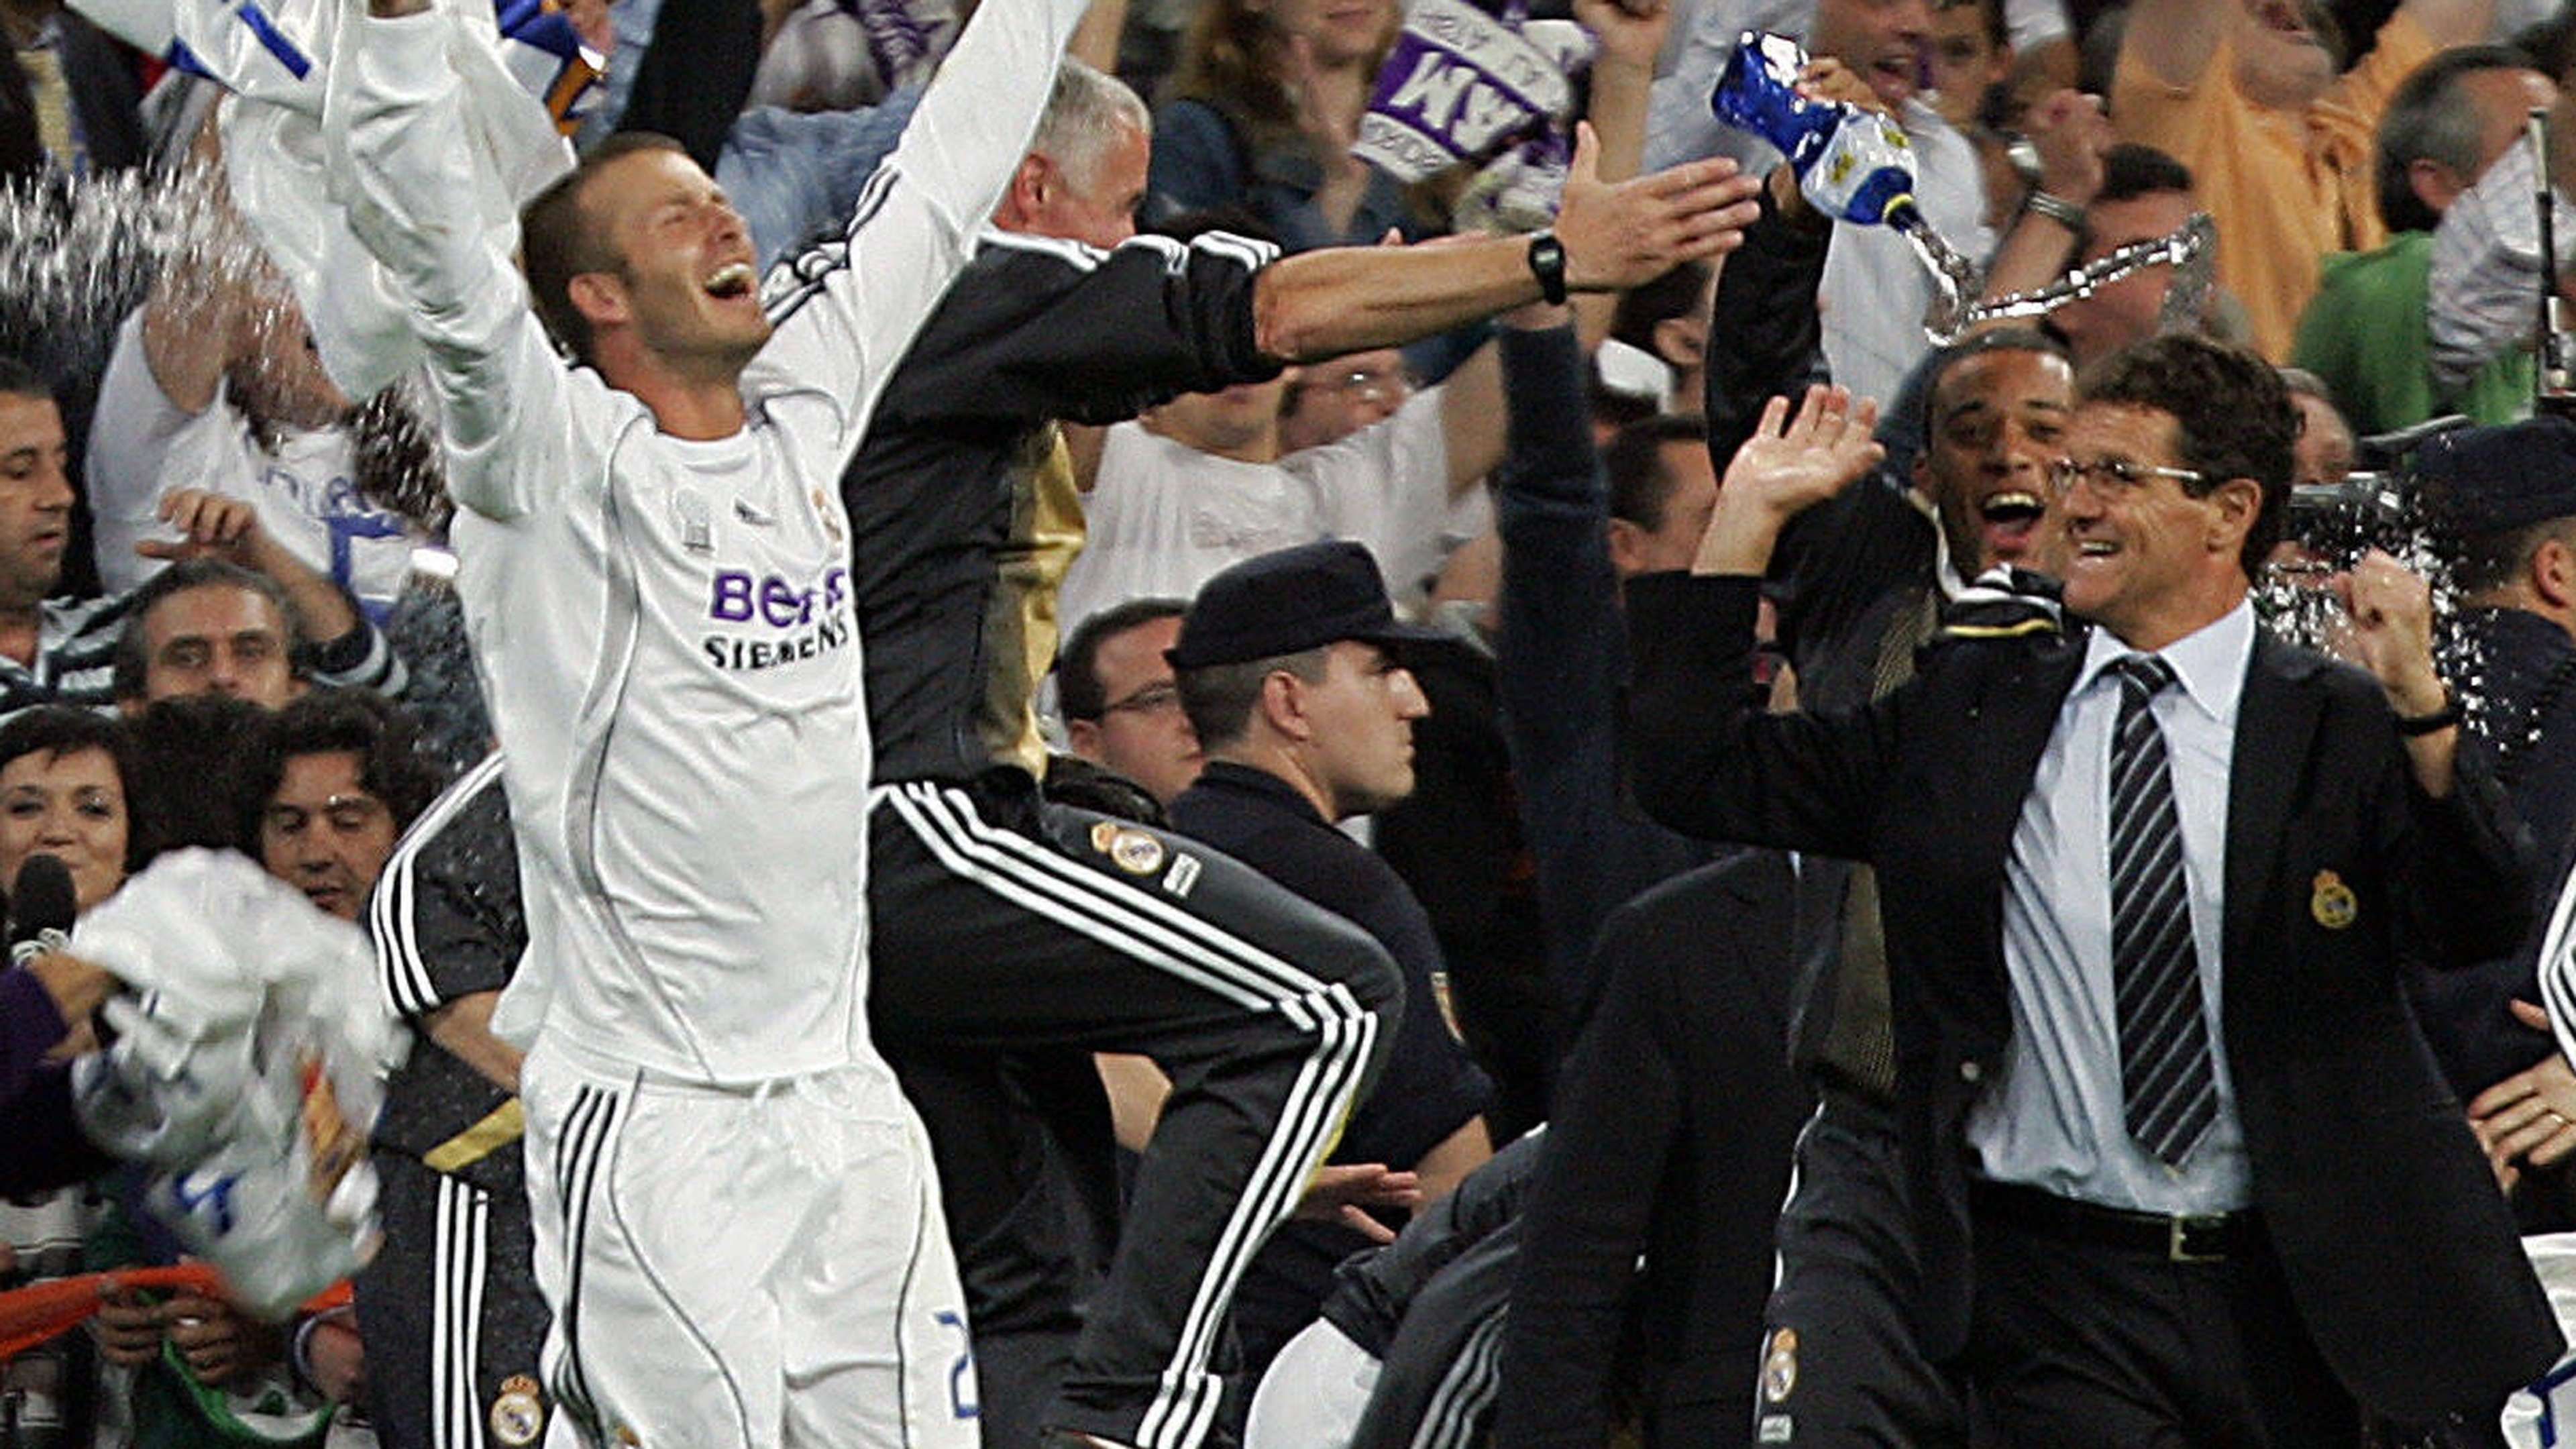 David Beckham Fabio Capello Real Madrid win Liga trophy at 2007